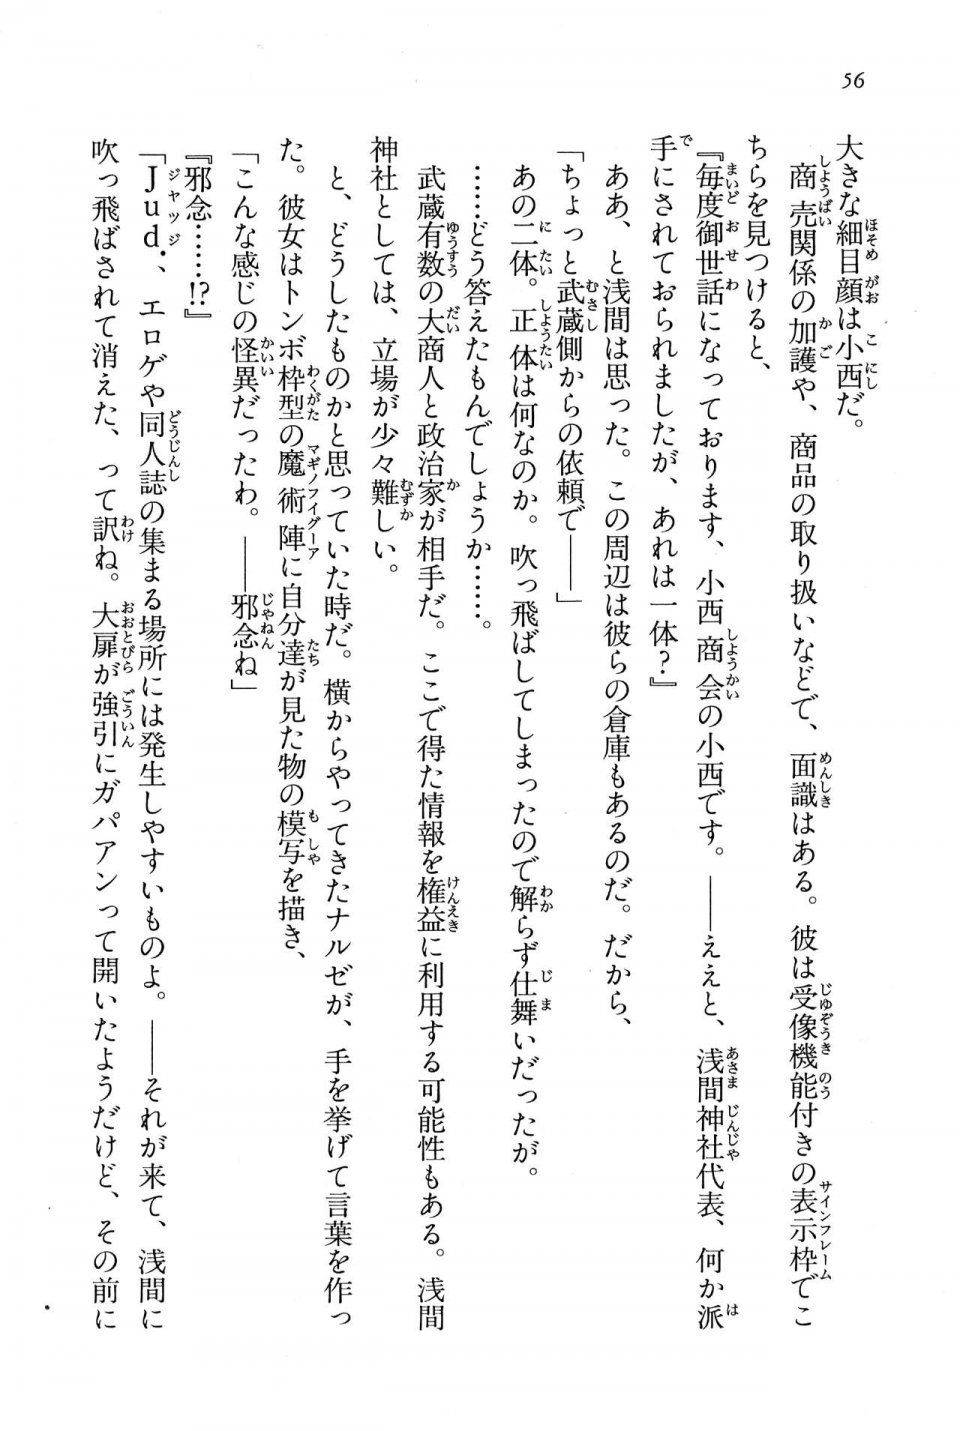 Kyoukai Senjou no Horizon BD Special Mininovel Vol 6(3B) - Photo #60